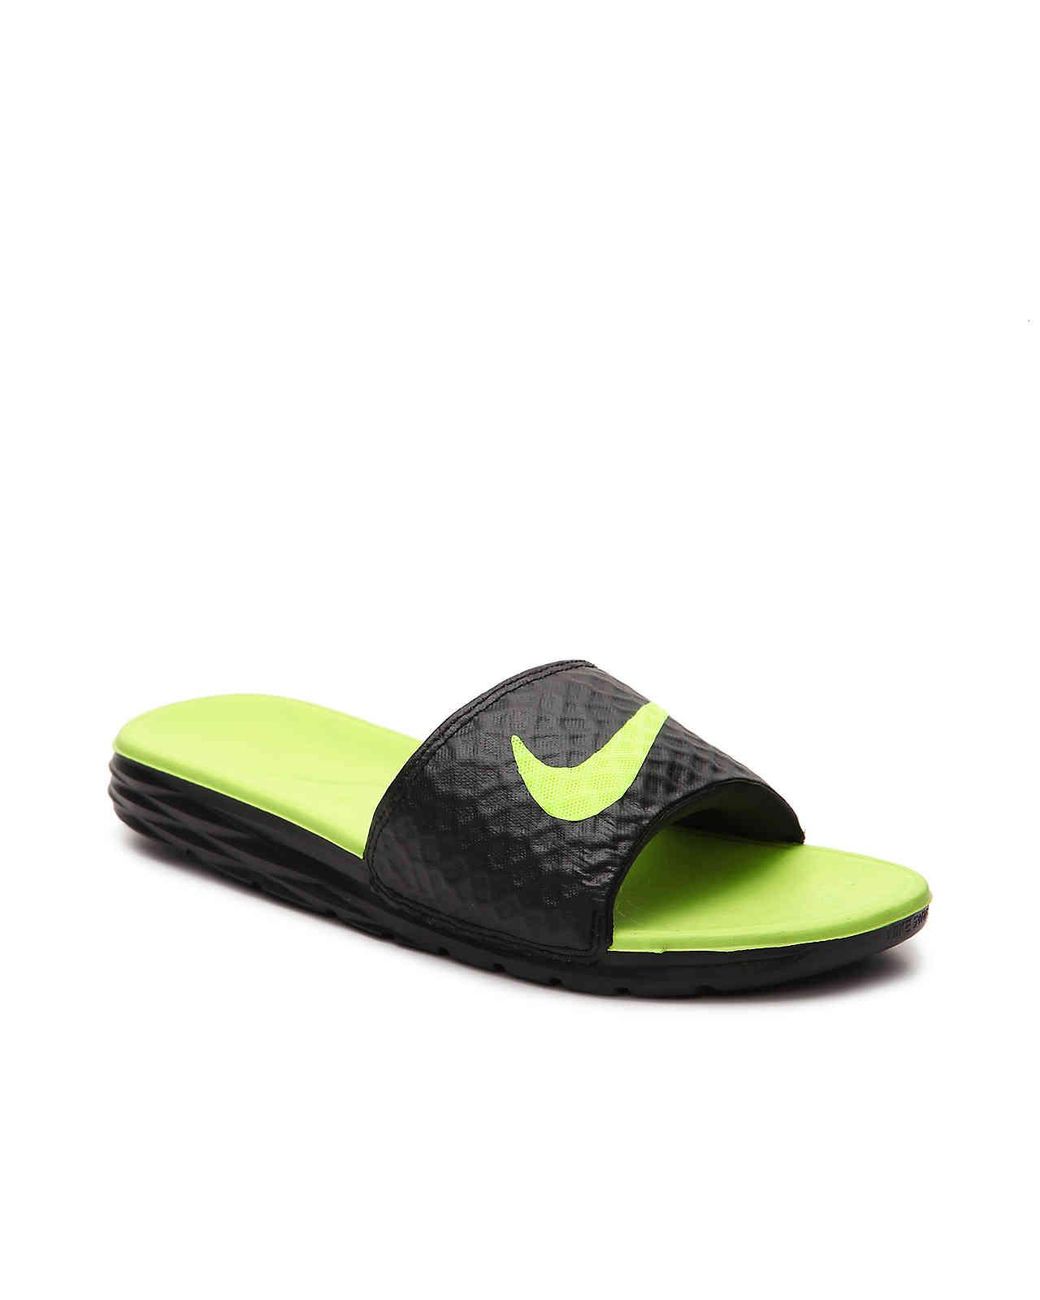 Nike Synthetic Benassi Solarsoft 2 Slide Sandal in Black/Neon